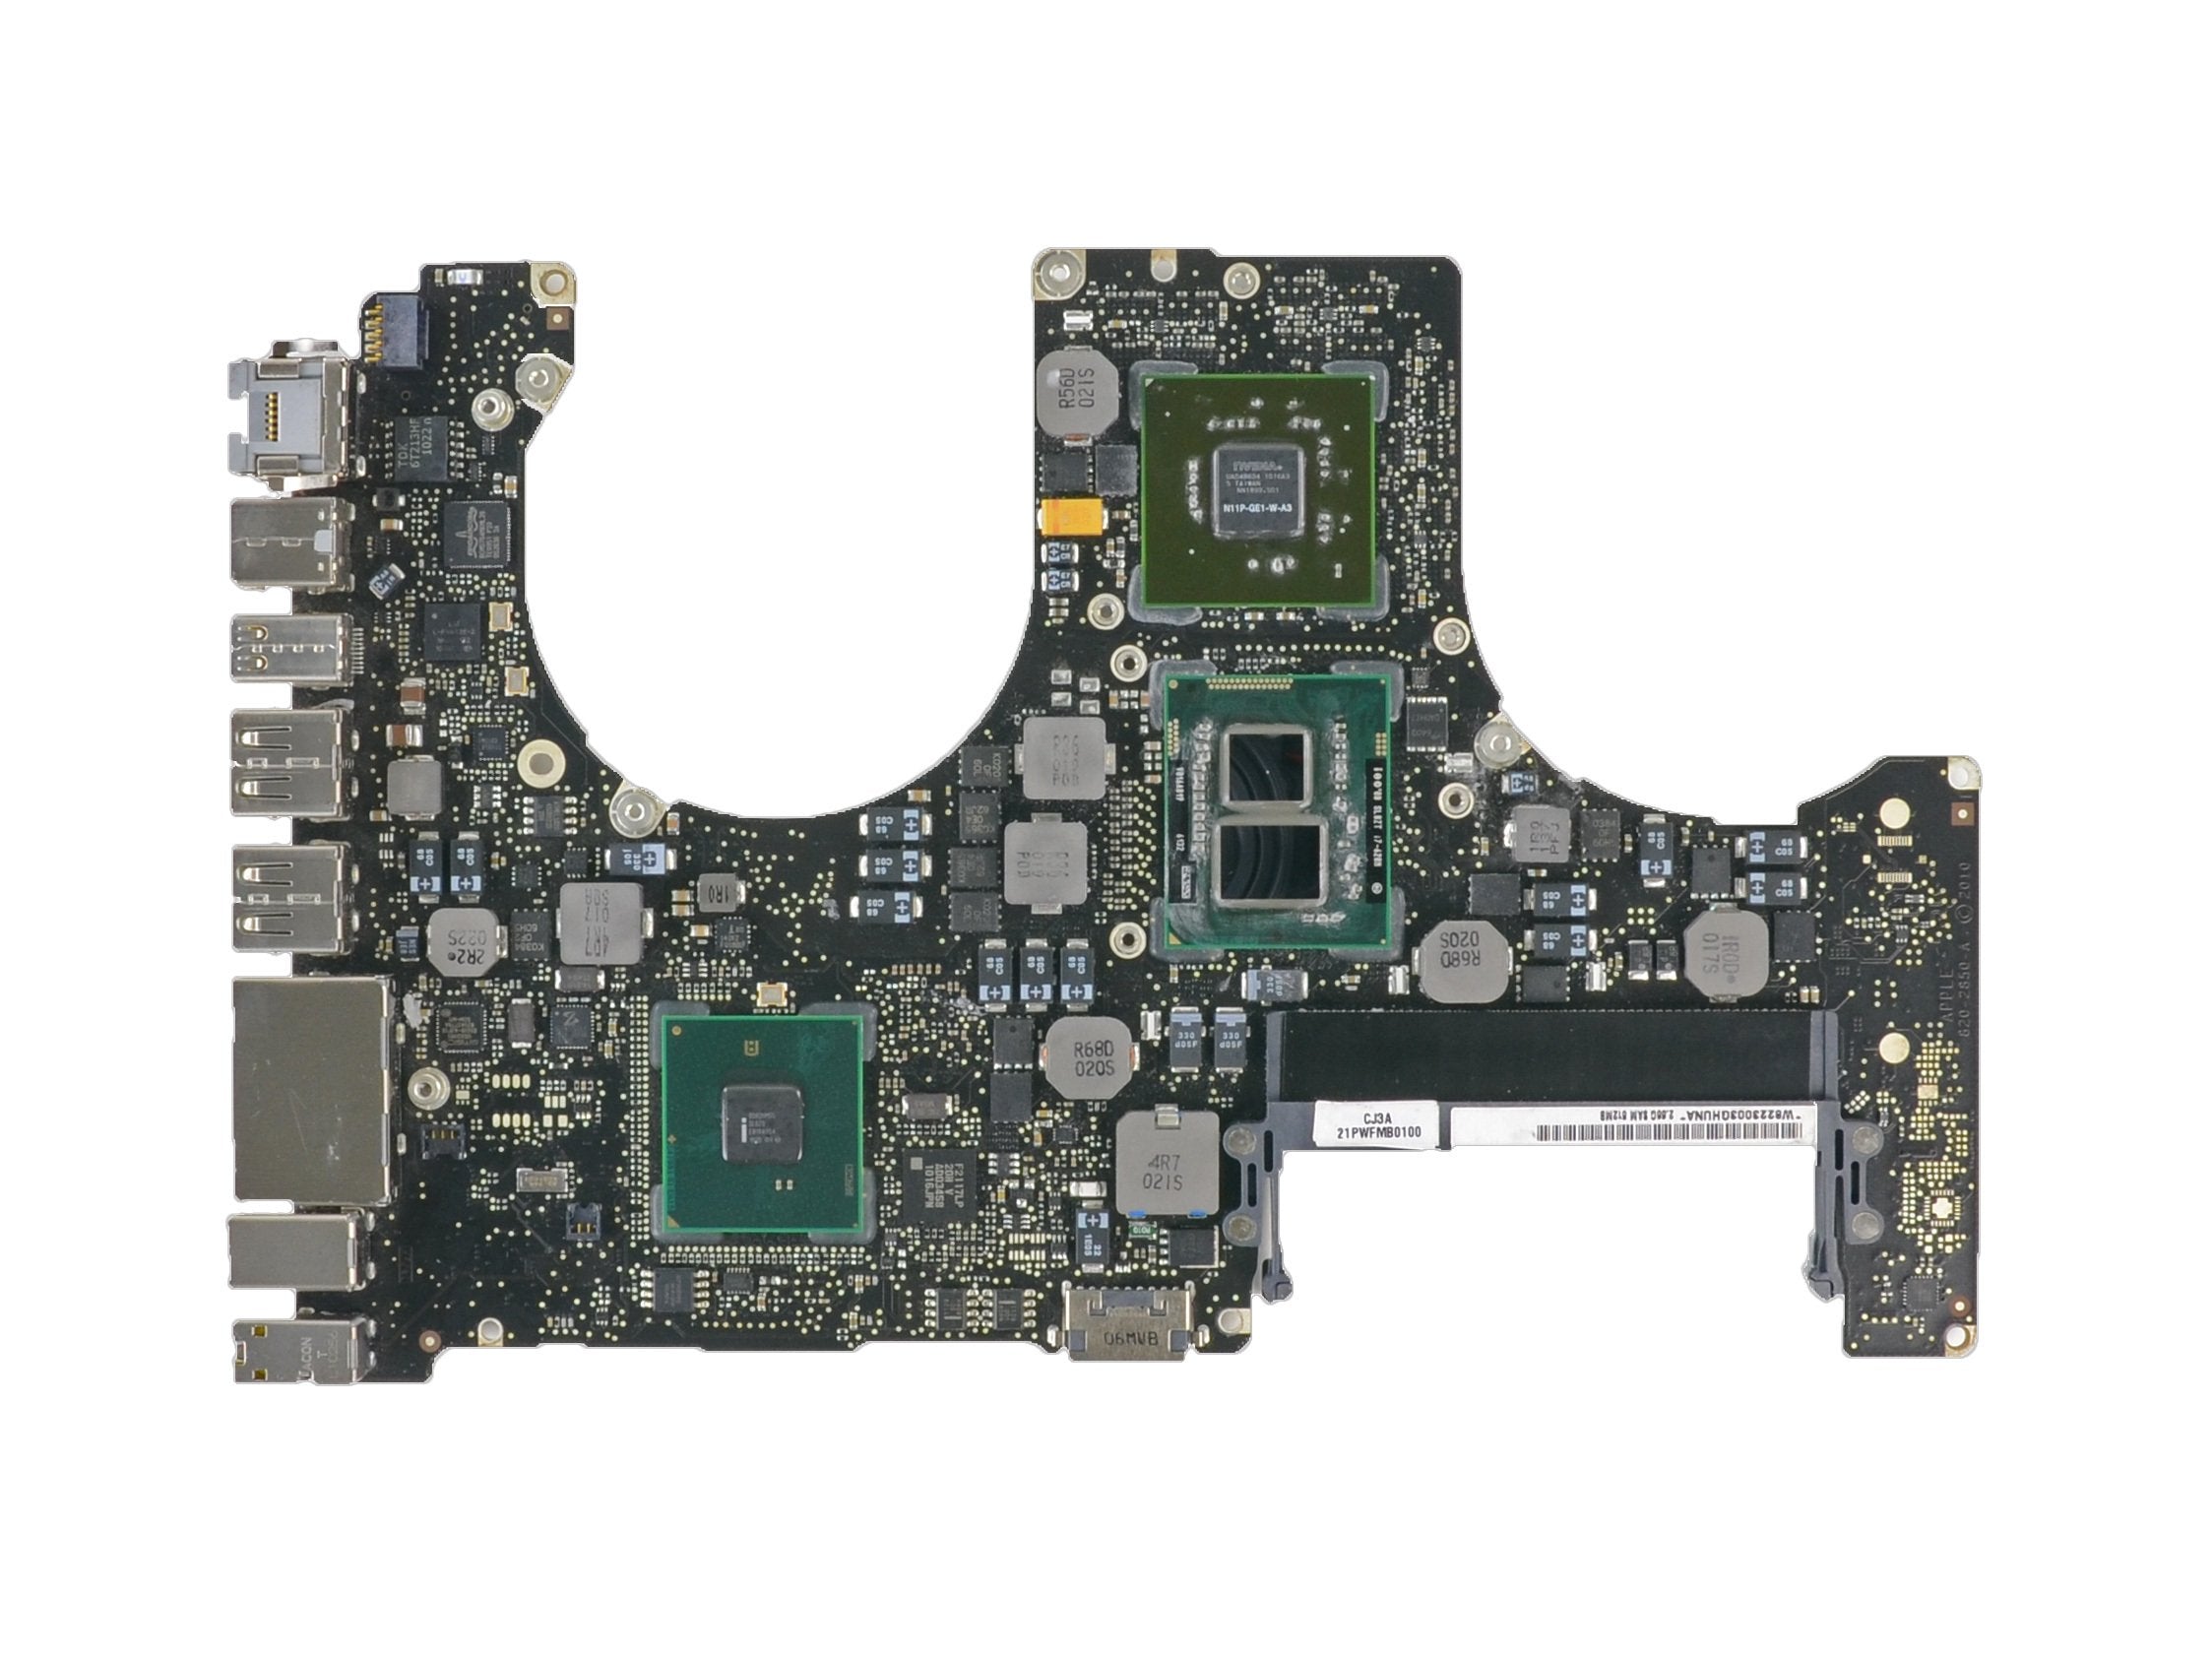 MacBook Pro 15" Unibody (Mid 2010) 2.66 GHz Logic Board